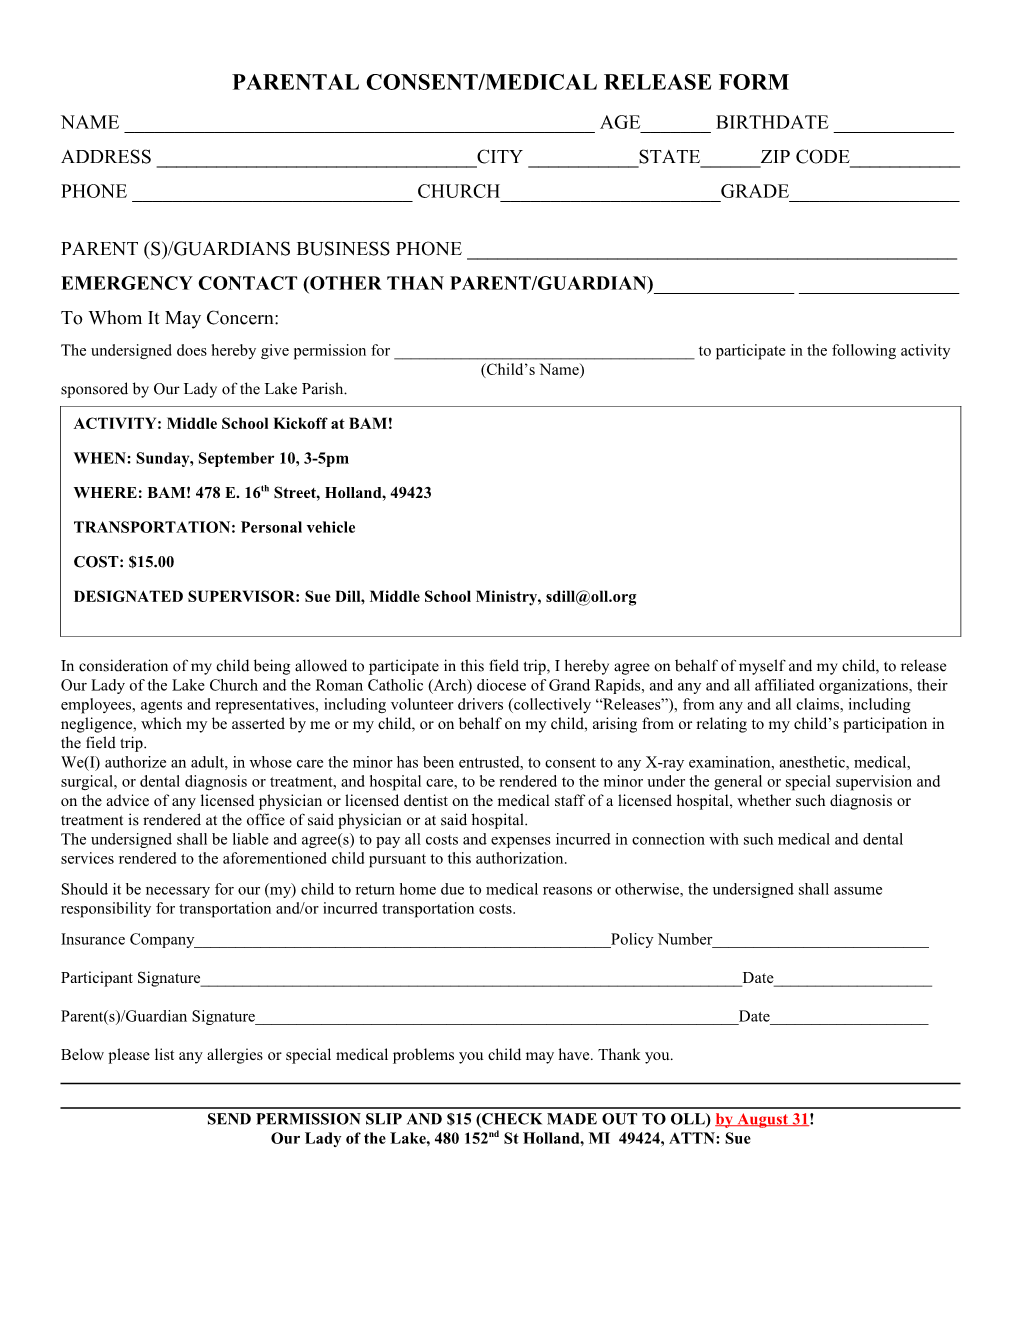 Parental Consent/Medical Release Form